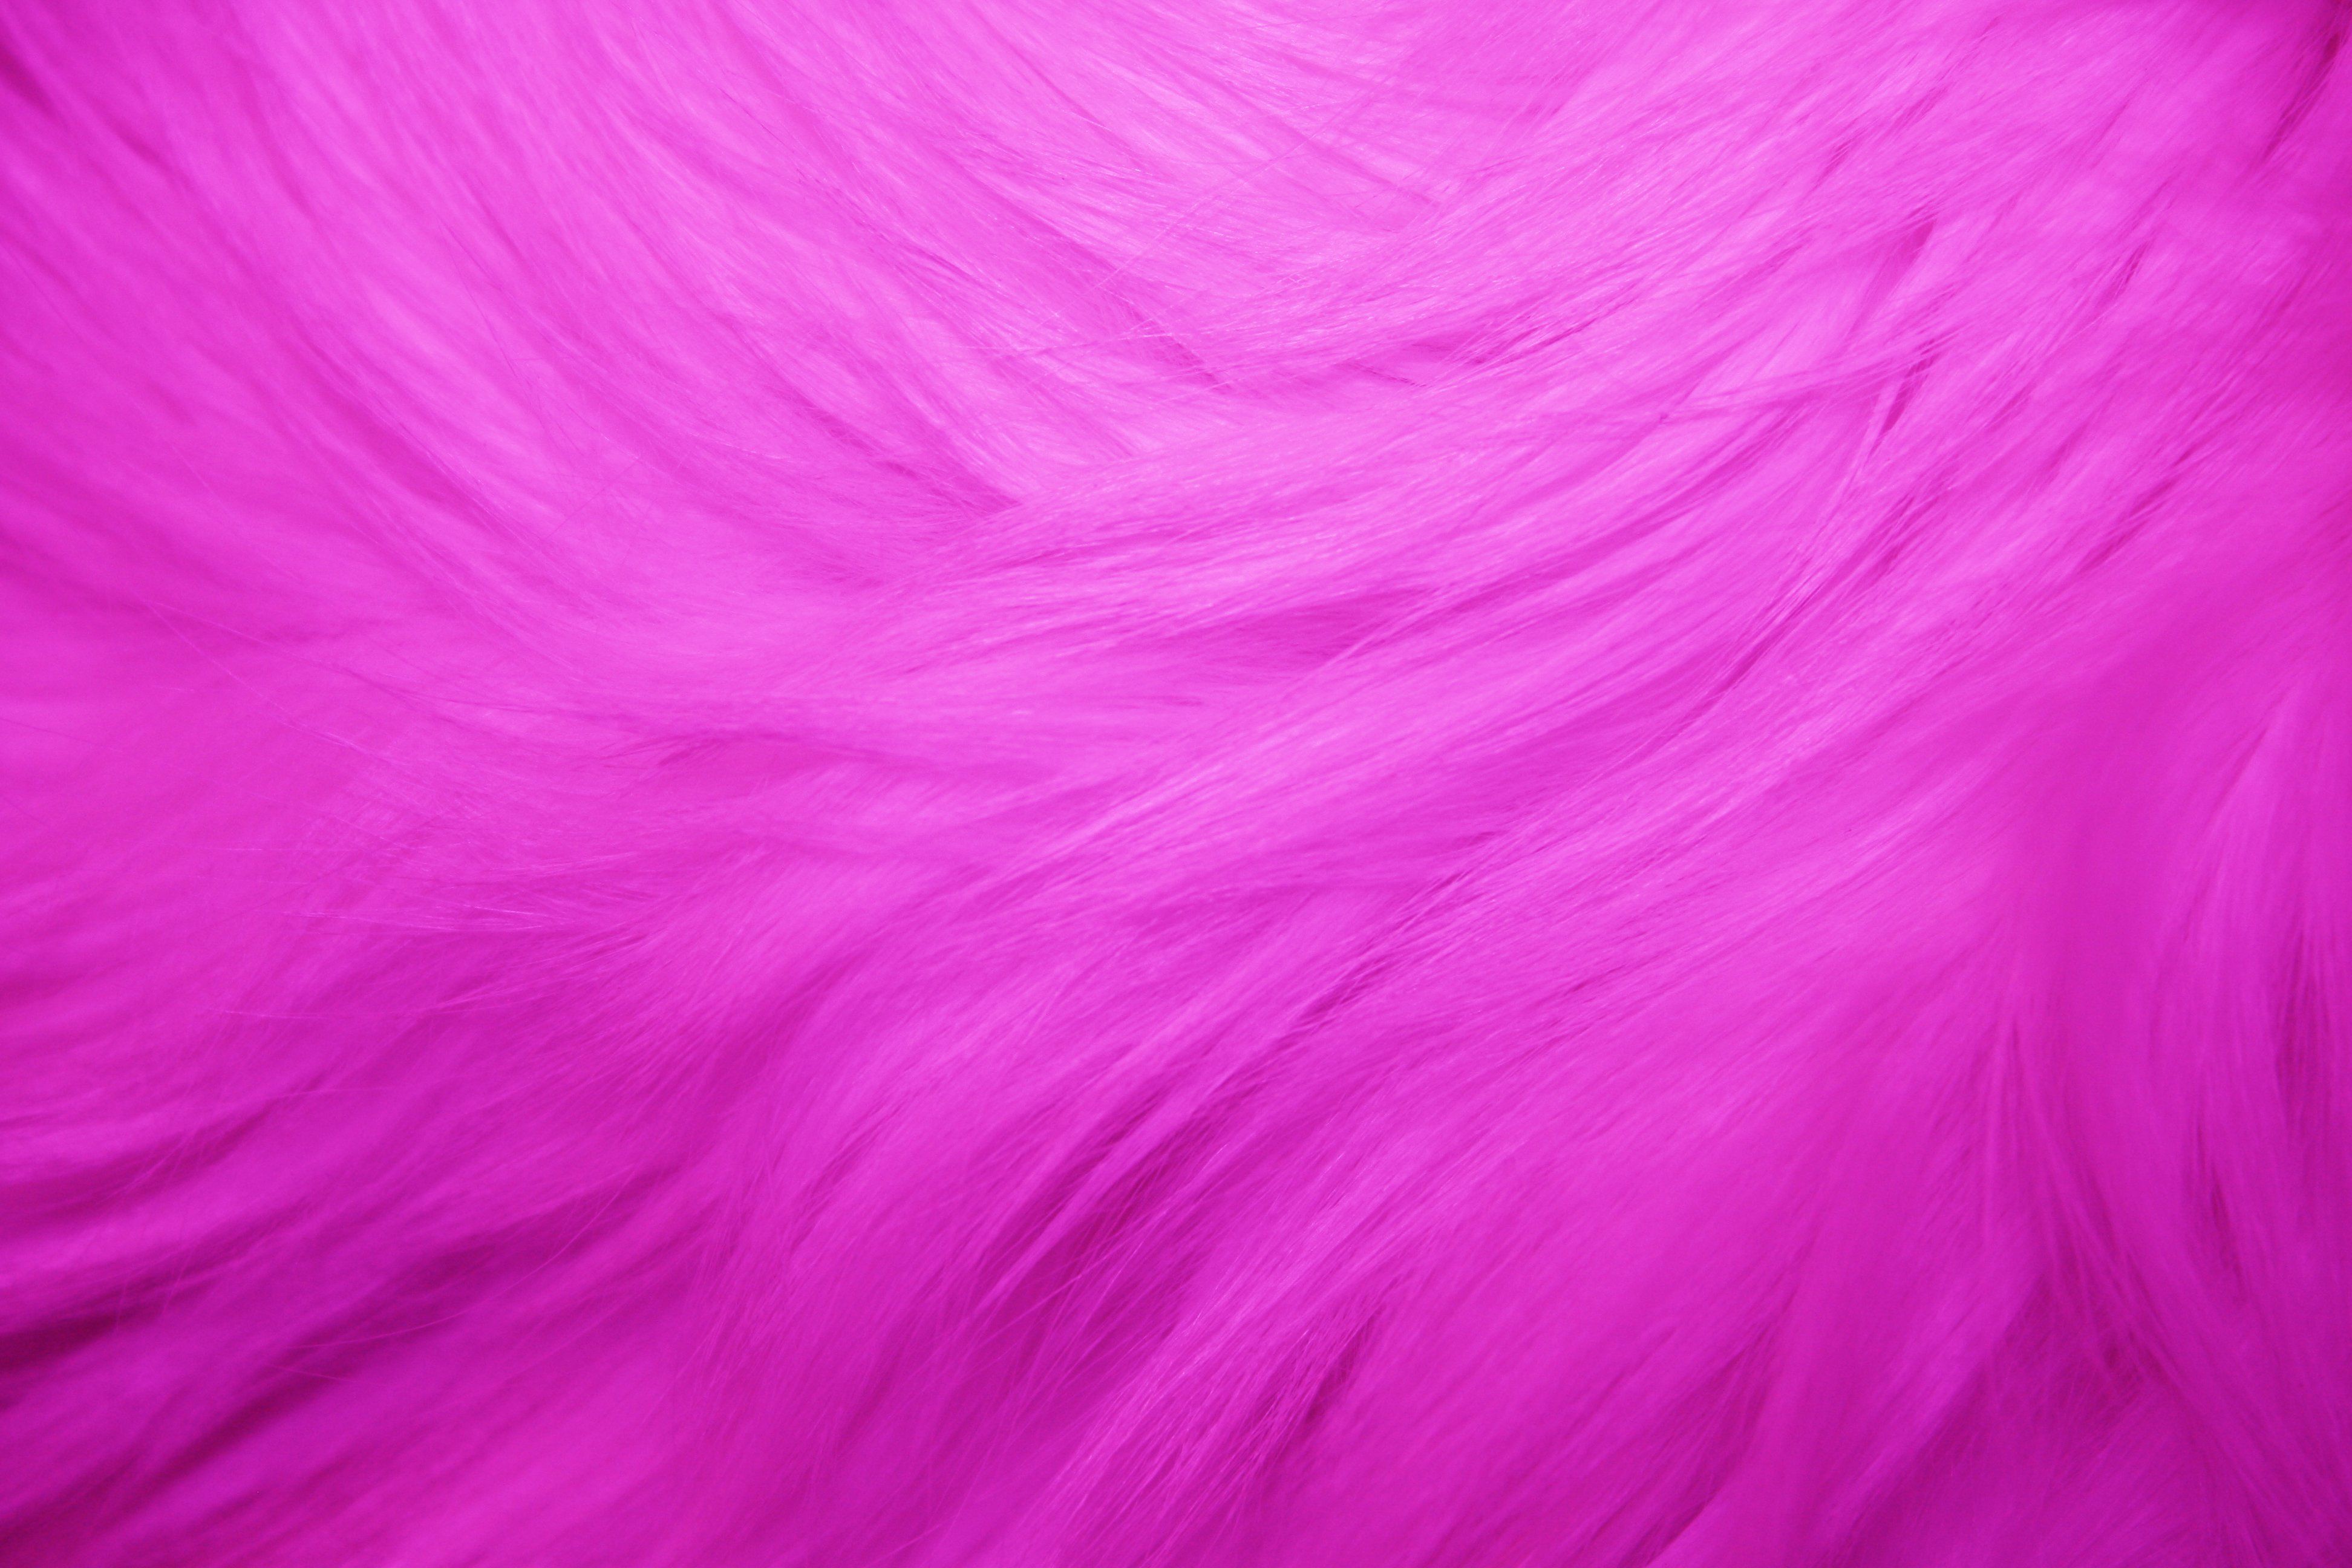 Hot Pink Fur Texture Picture. Free Photograph. Photo Public Domain